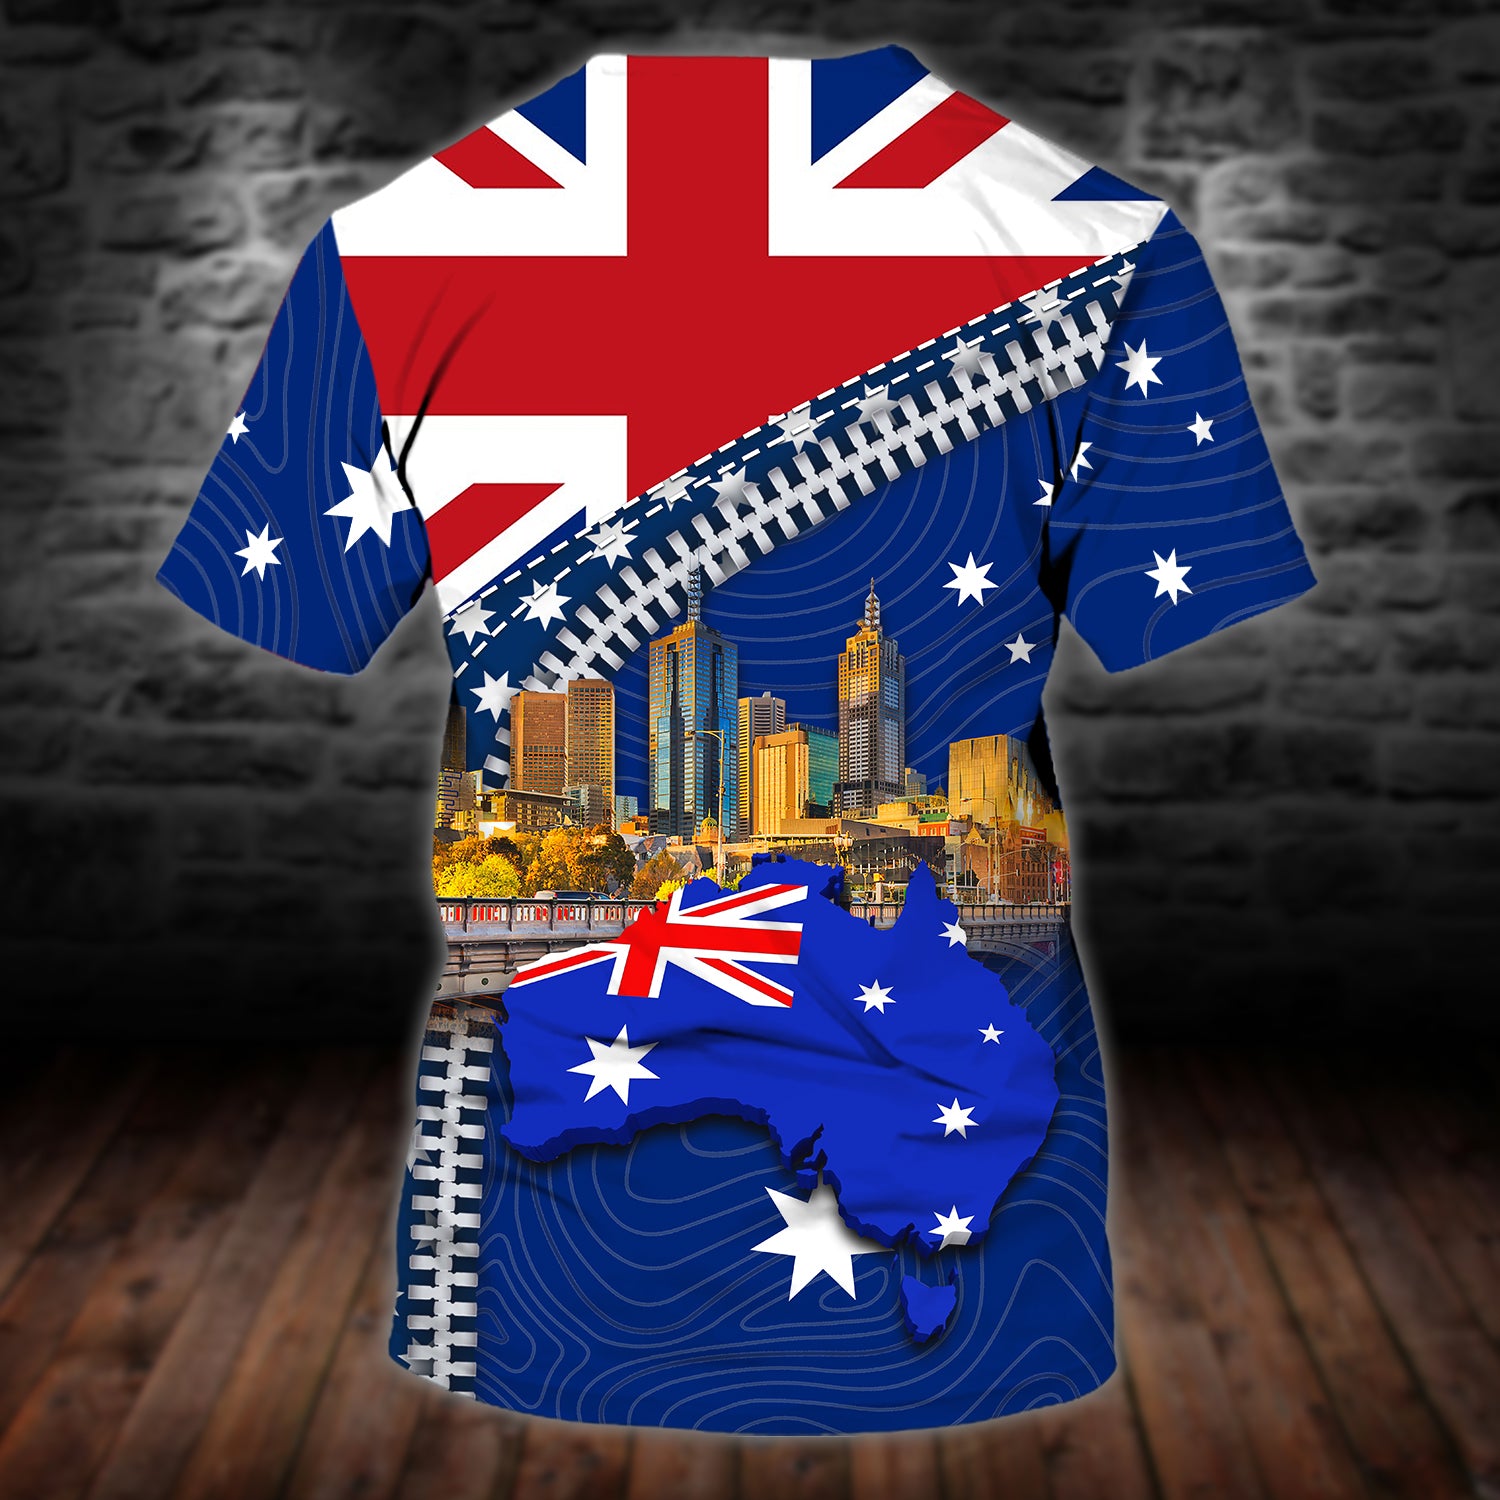 Melbourne, Happy Australia Day, 26 January - 3D Tshirt - Tad 337